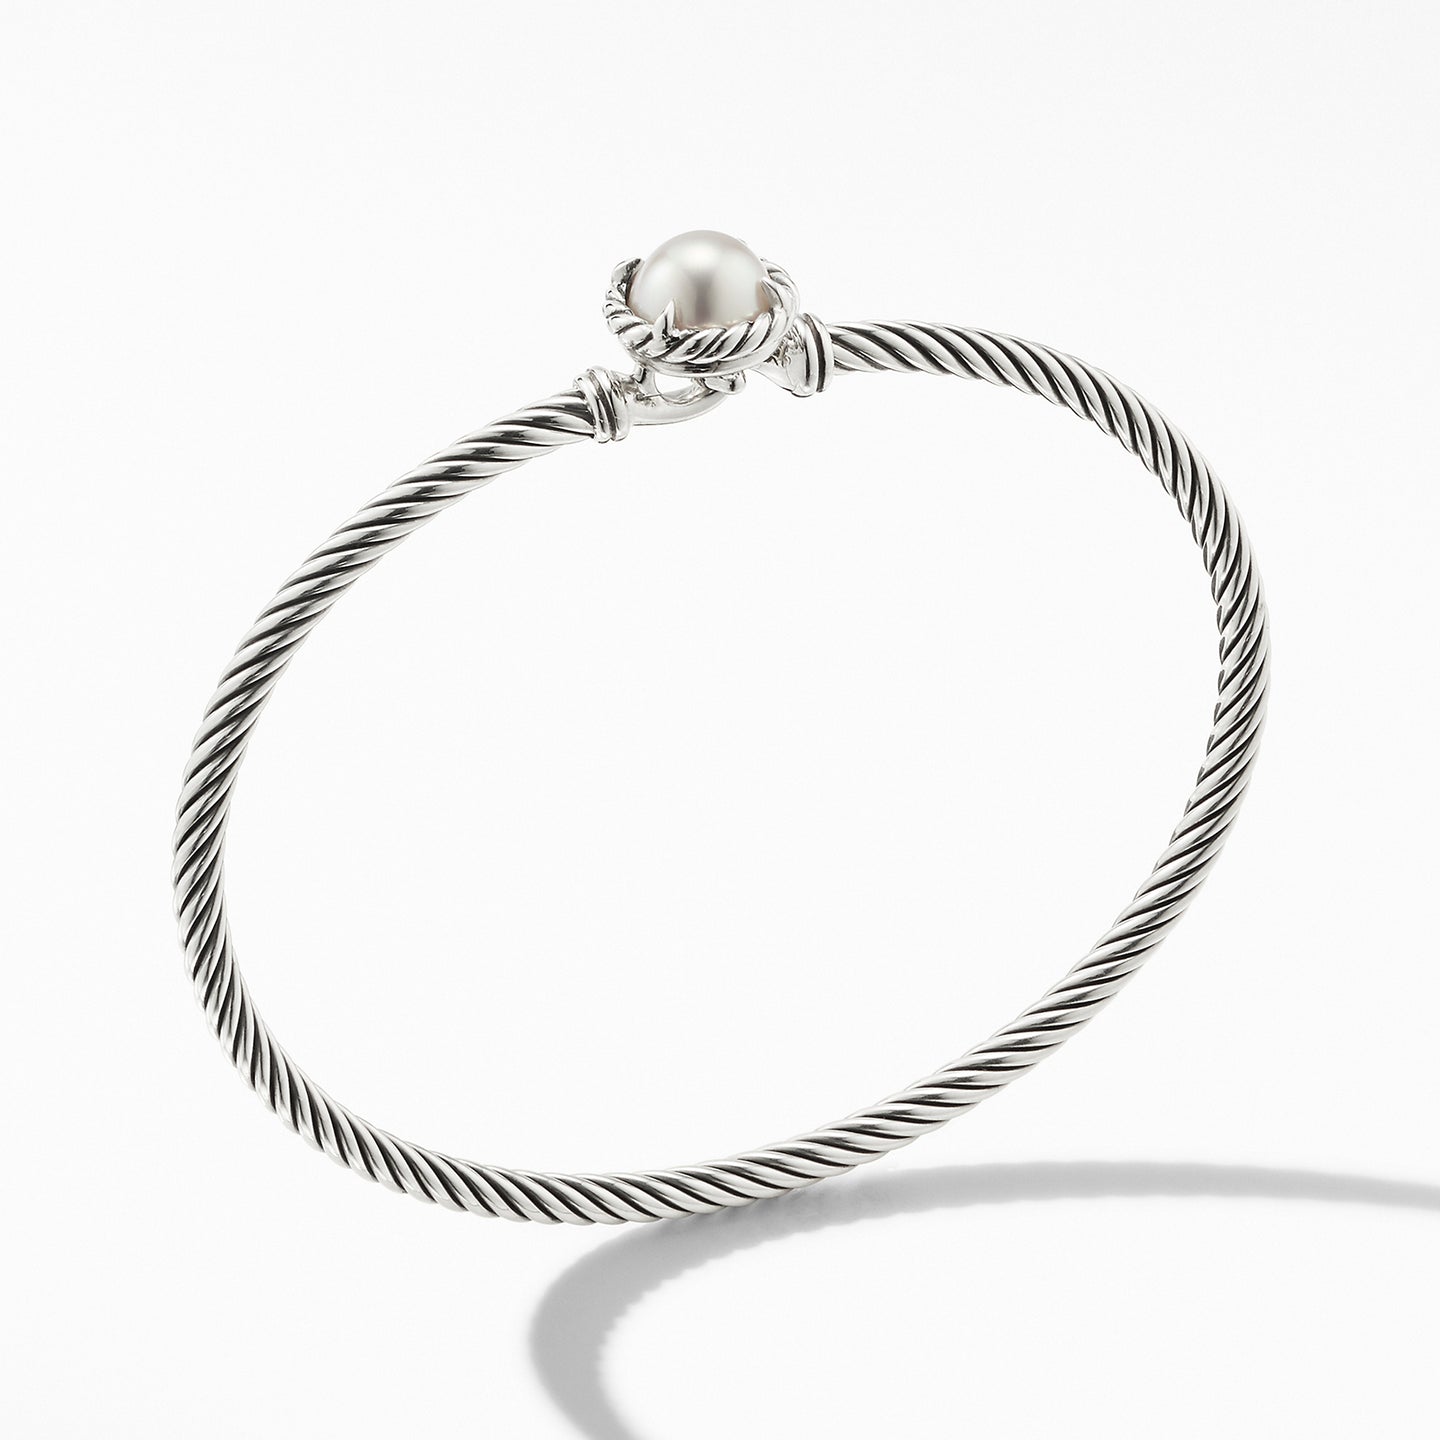 Chatelaine Bracelet with Pearls, Size Medium